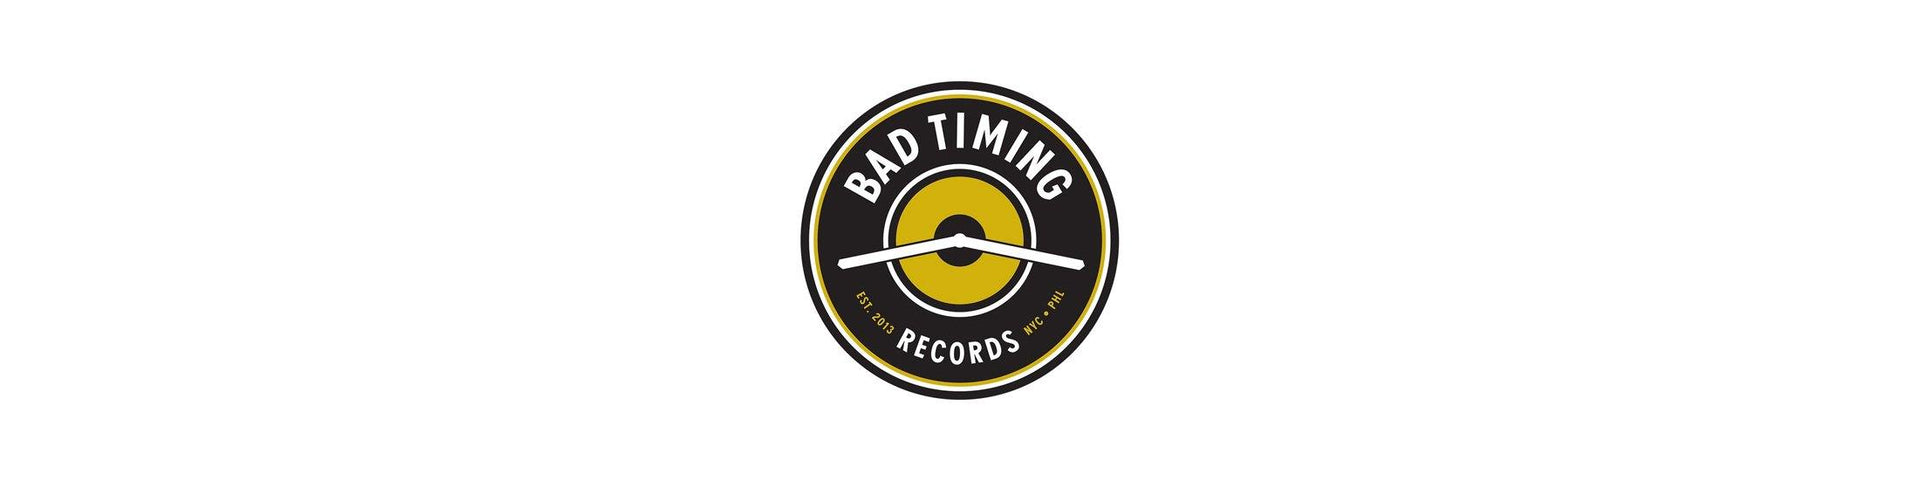 Shop – Bad Timing Records – Band & Music Merch – Cold Cuts Merch